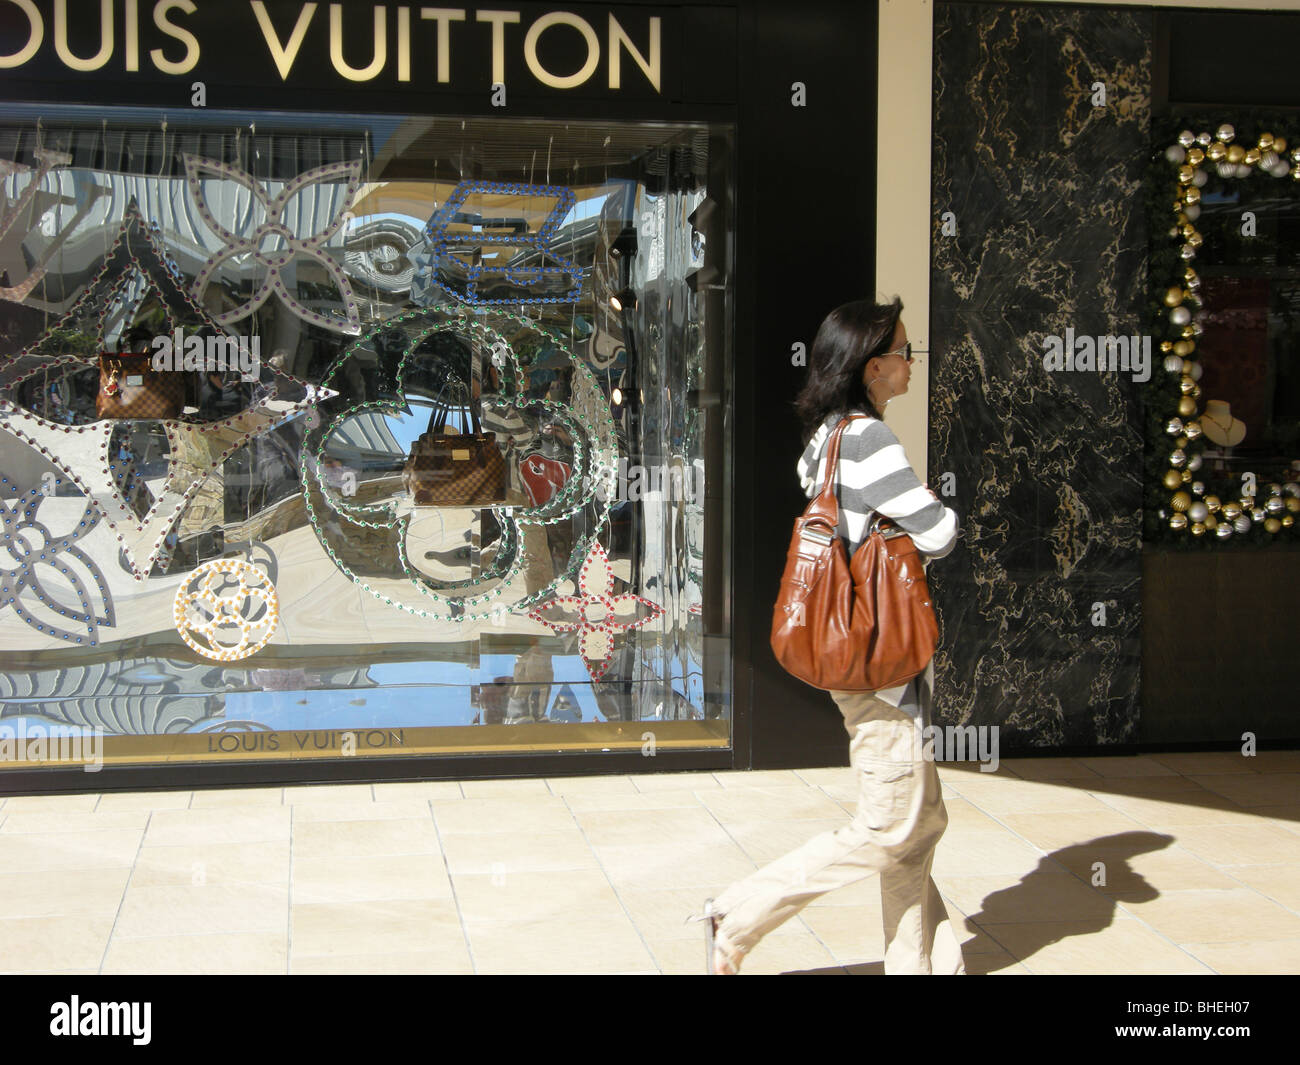 ASIAN LOUIS VUITTON SHOPPER with SHOPPING BAG Editorial Photography - Image  of shopper, consumer: 125828112